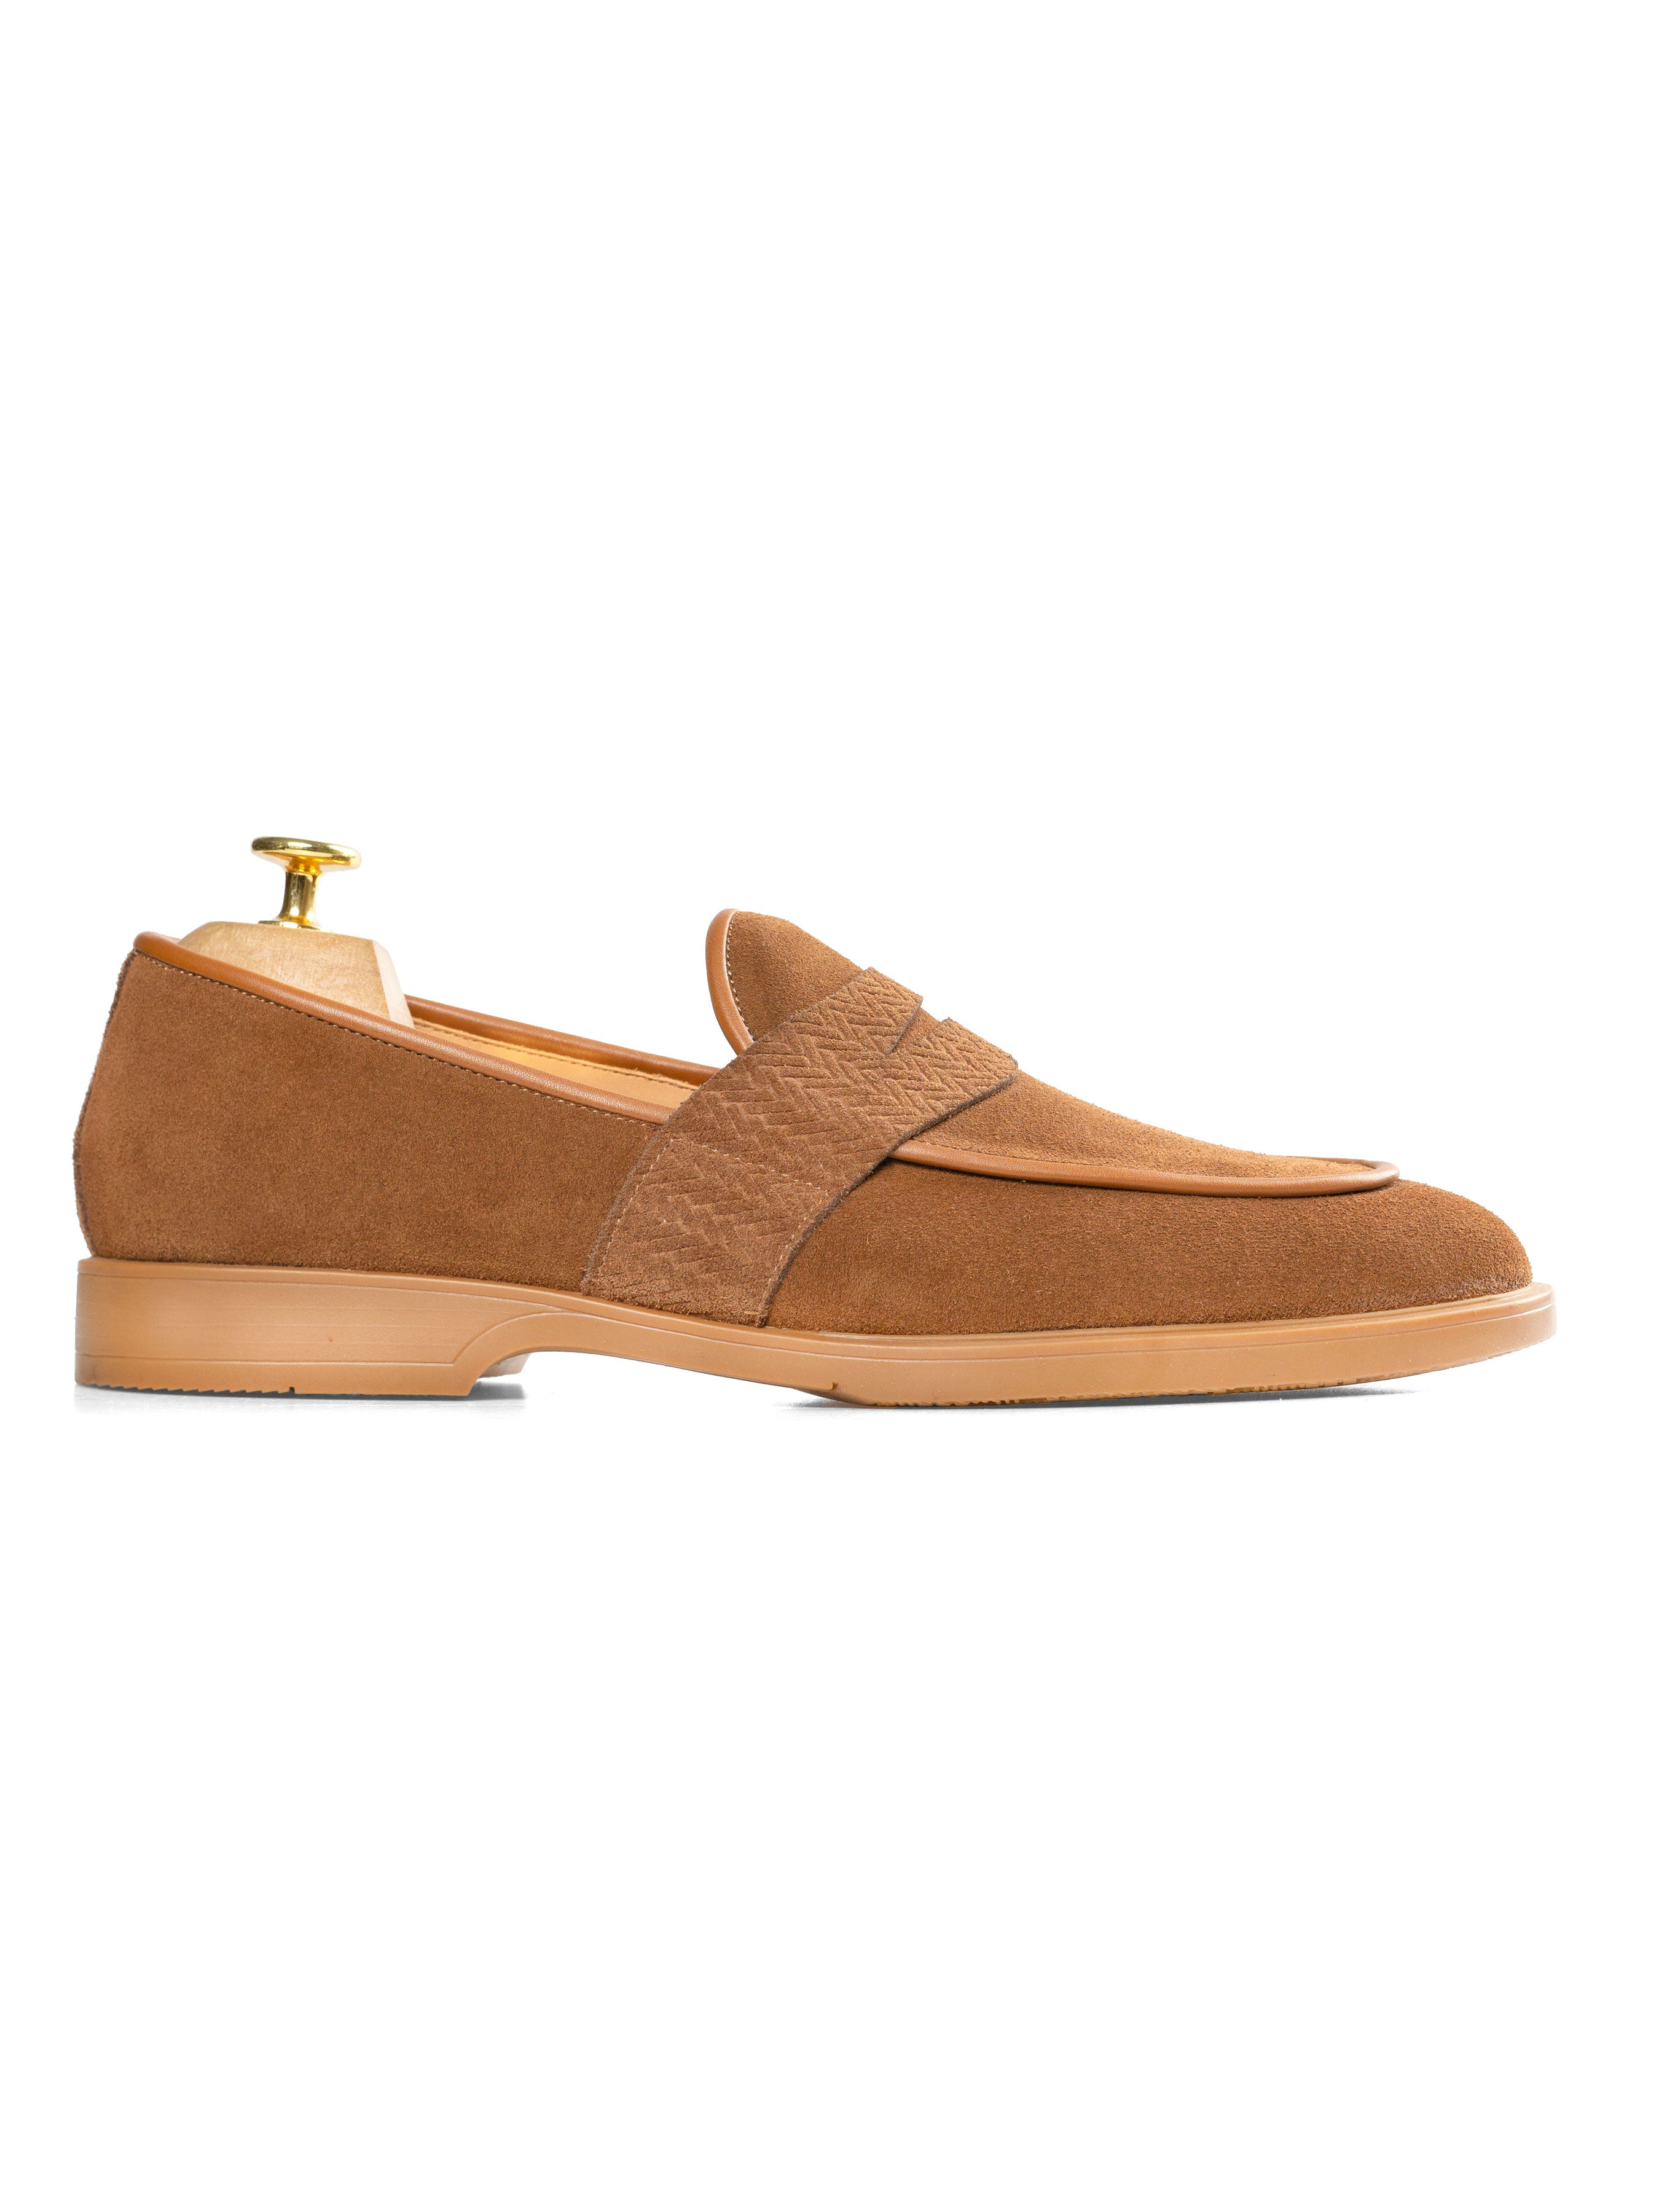 Belgian Loafer Penny - Camel Suede Leather (Soflex Sole) - Zeve Shoes